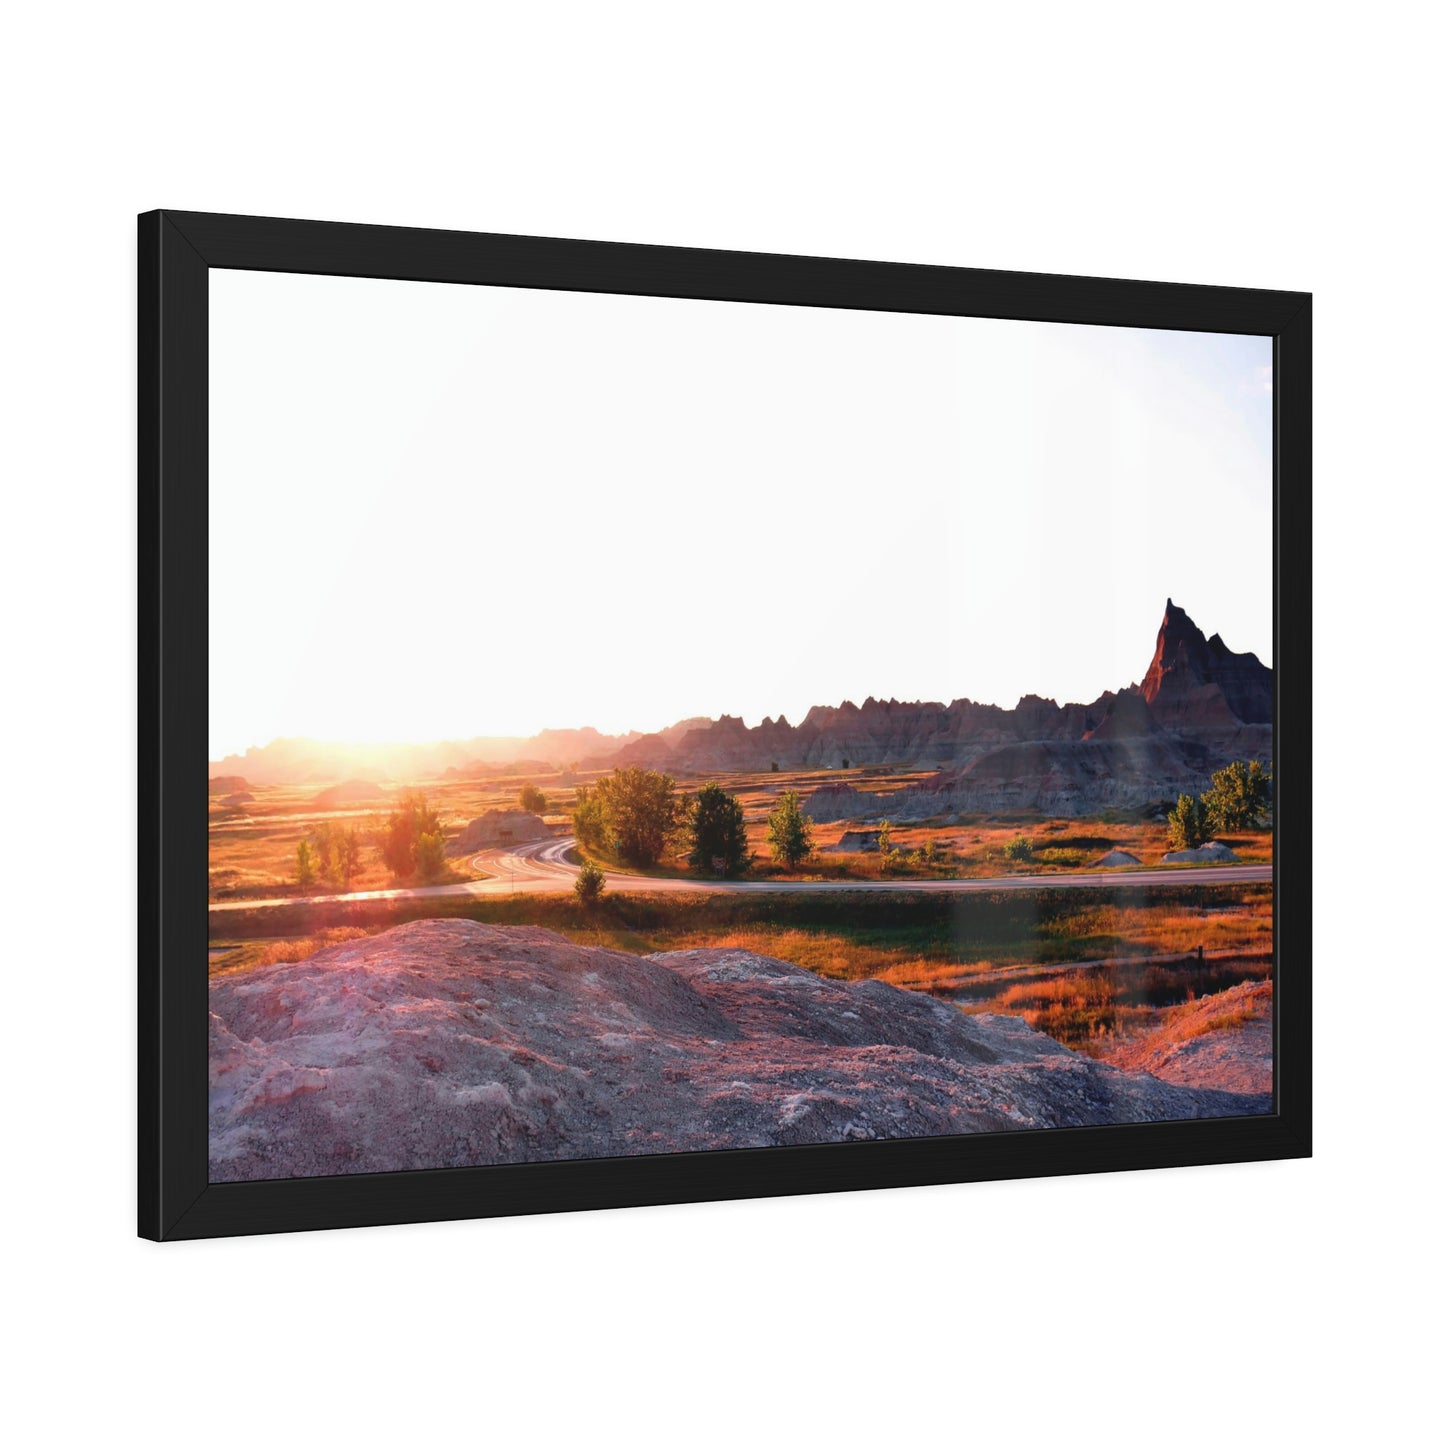 Sunset in The Badlands Framed Picture